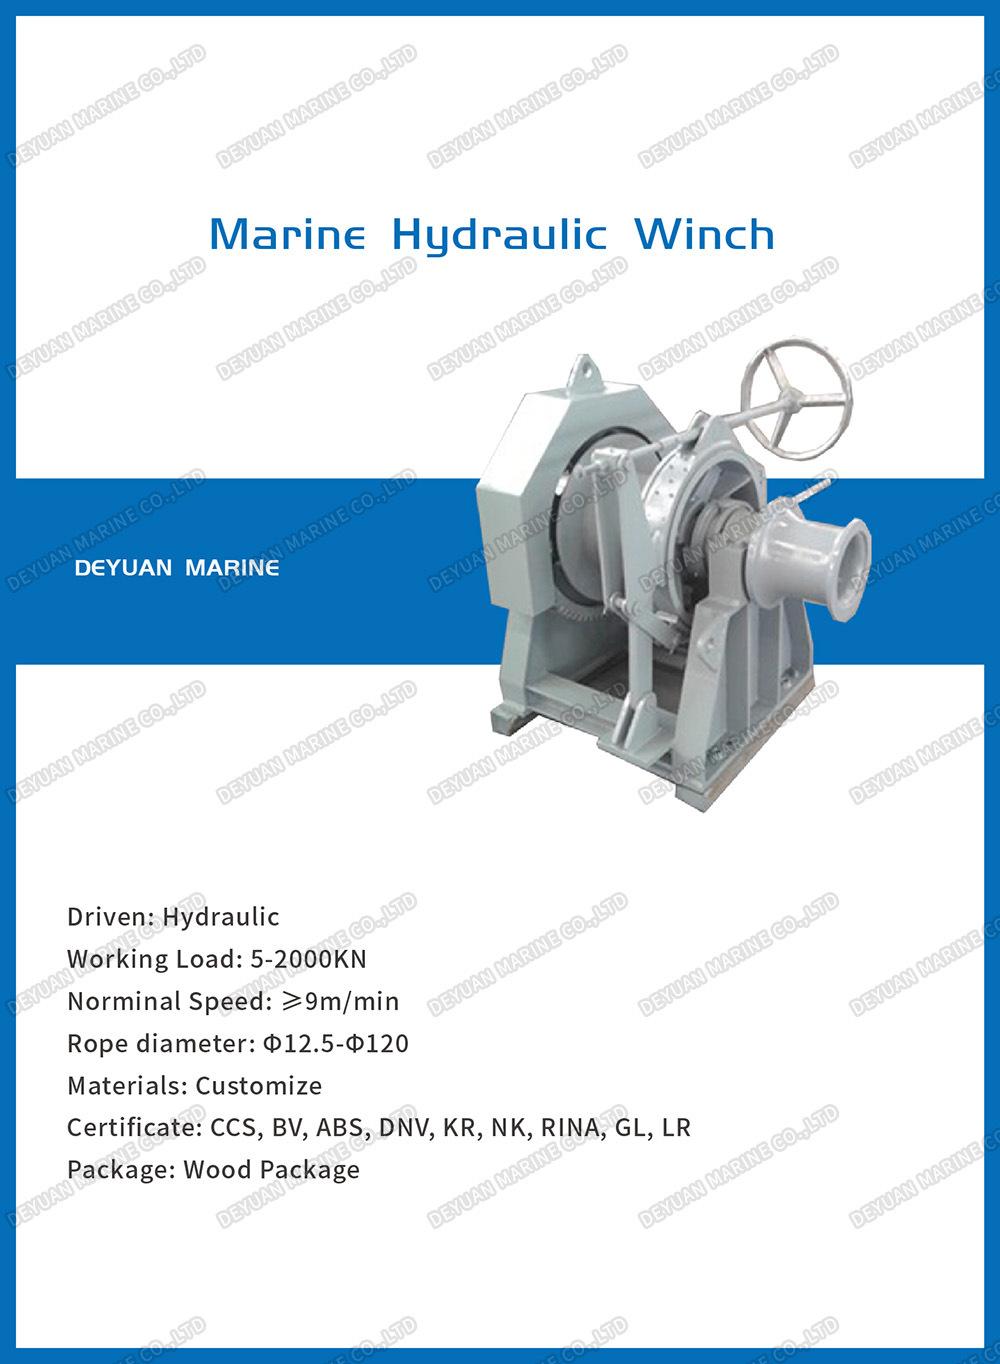 Marine Hydraulic Double Drum Mooring Winch